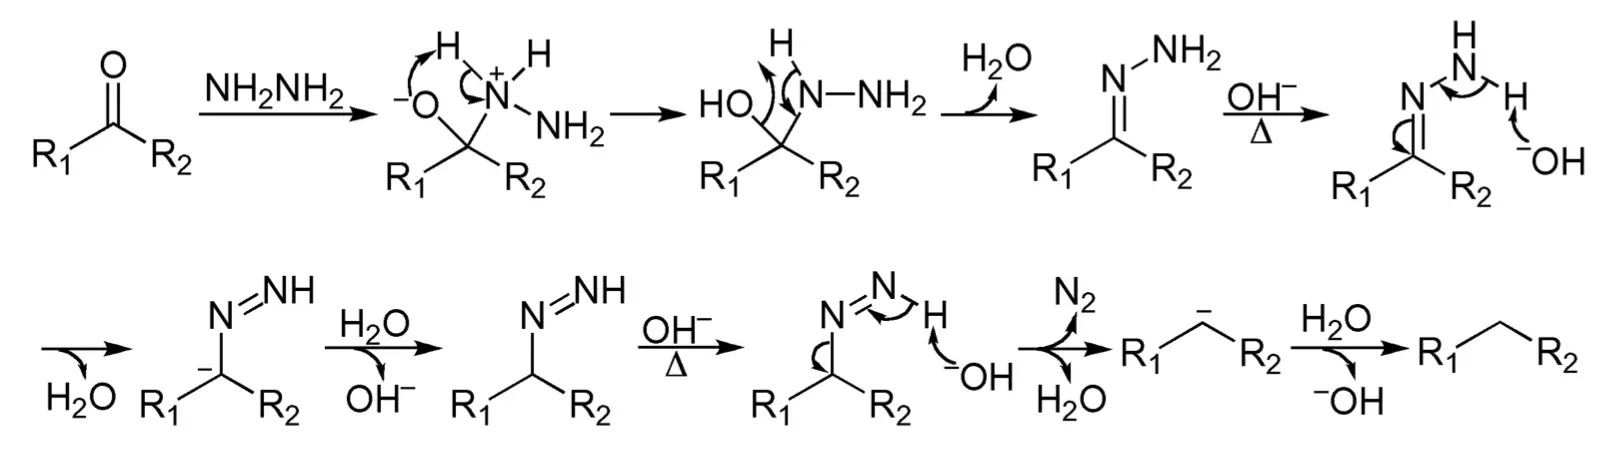 Wolff-Kishner reduction mechanism